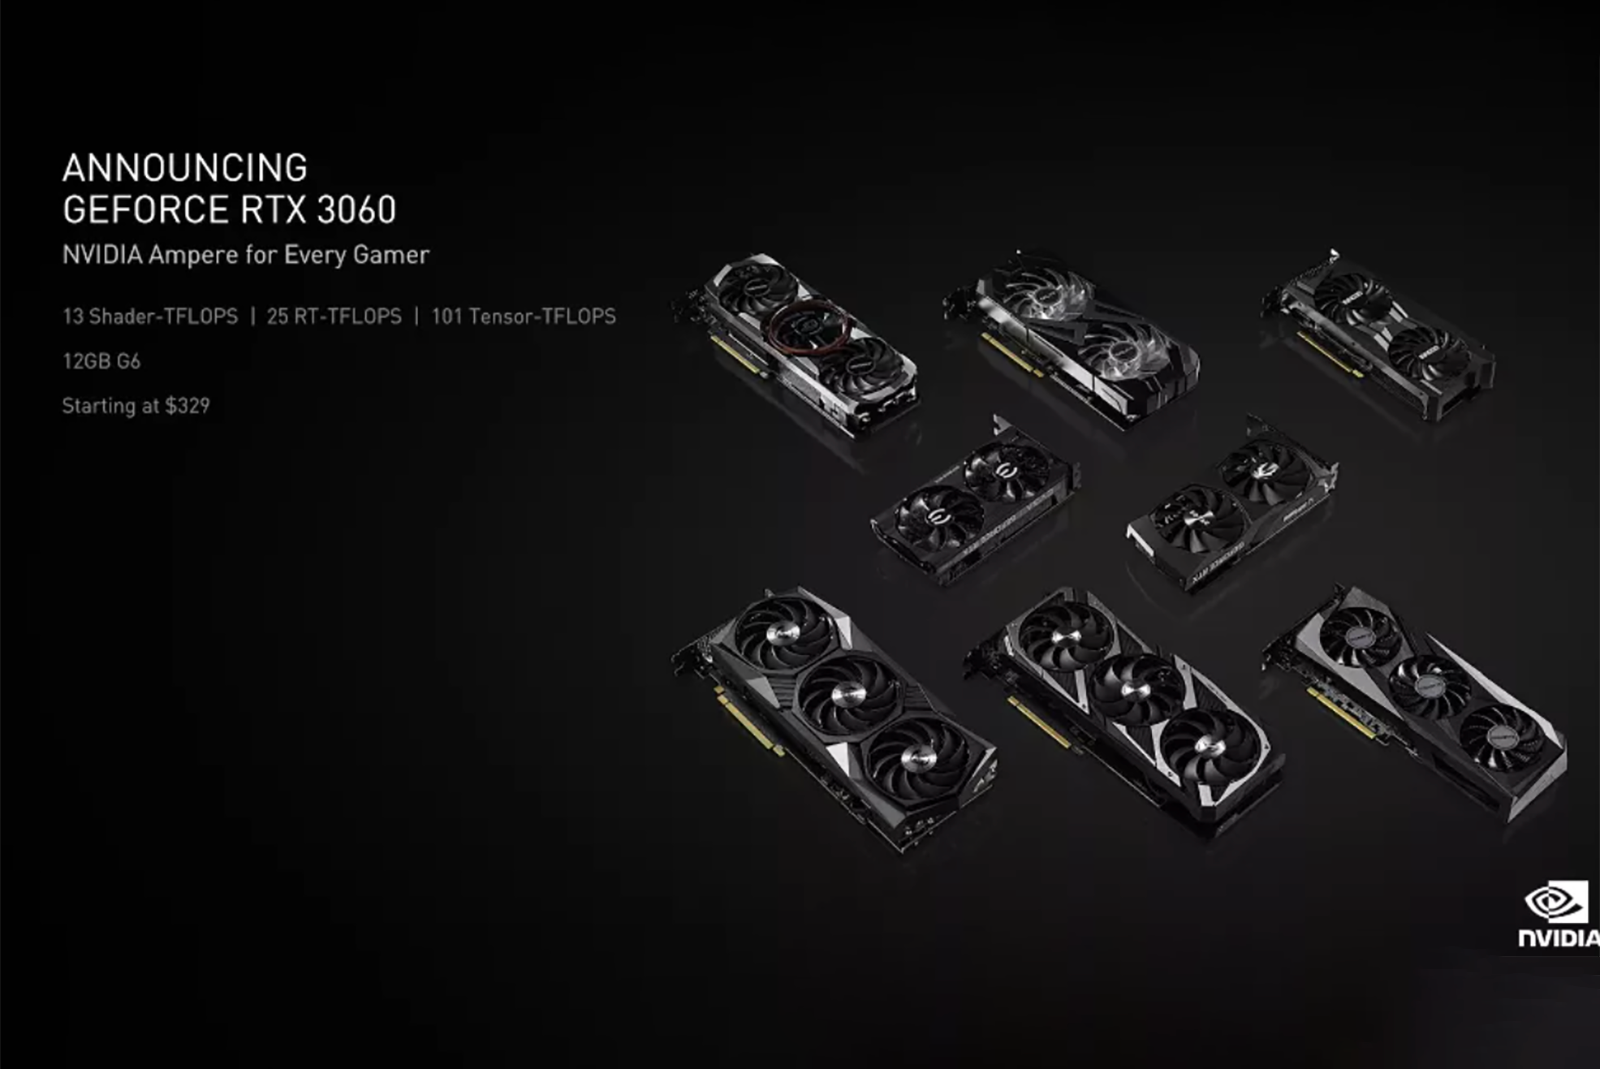 RTX 3000 series continues: Nvidia announces $329 GeForce RTX 3060 photo 1